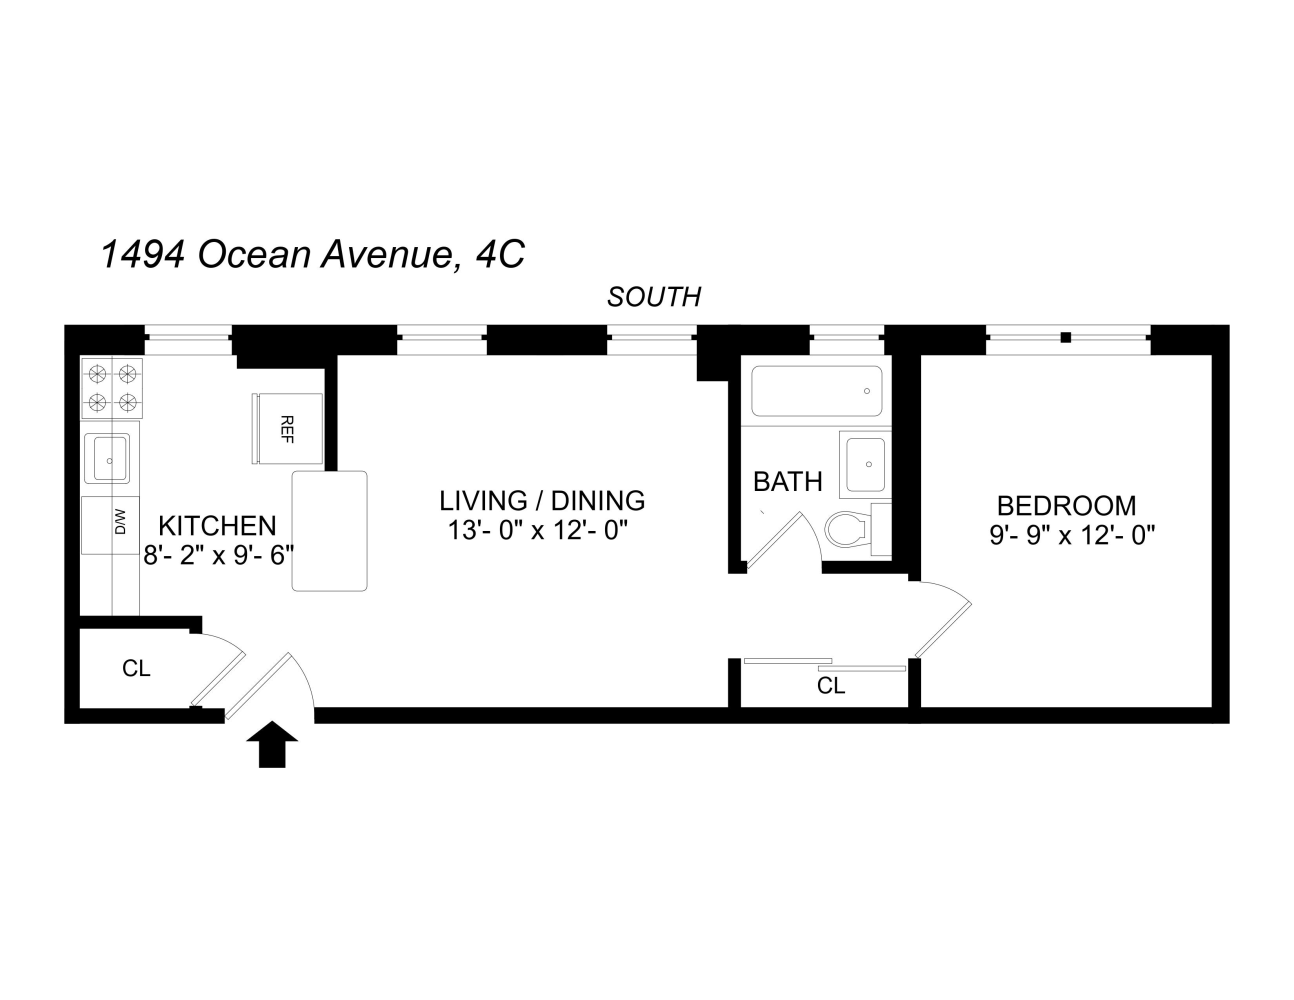 Floorplan for 1494 Ocean Avenue, 4C